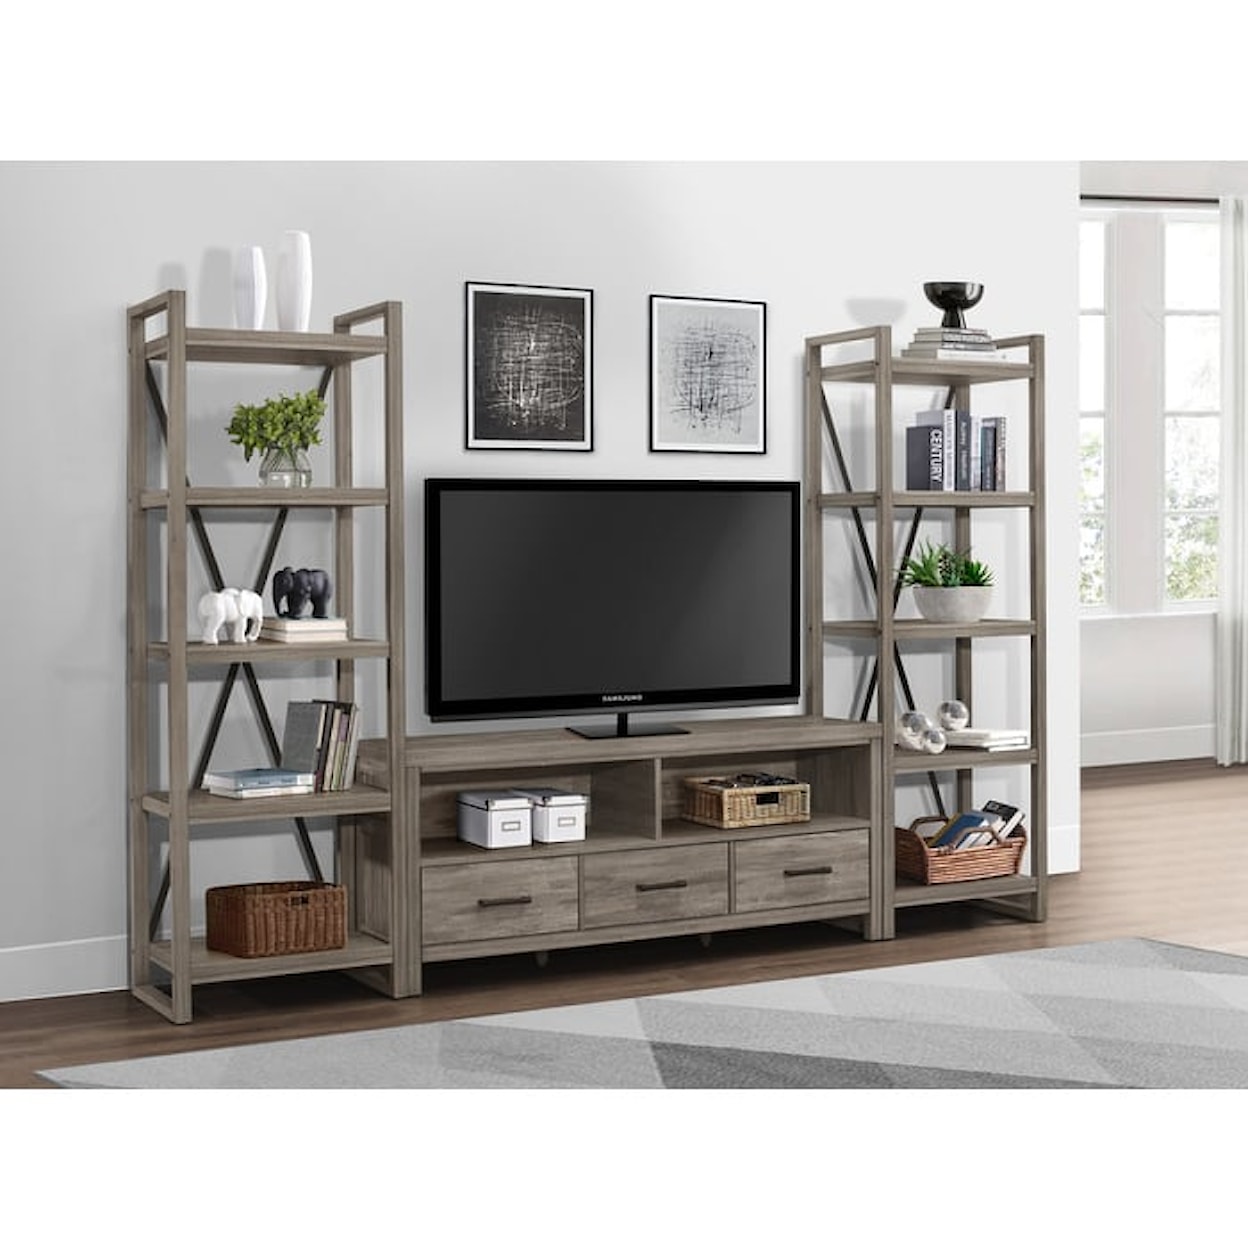 Homelegance Furniture Bainbridge TV Stand with 2 Open Storage Cabinets